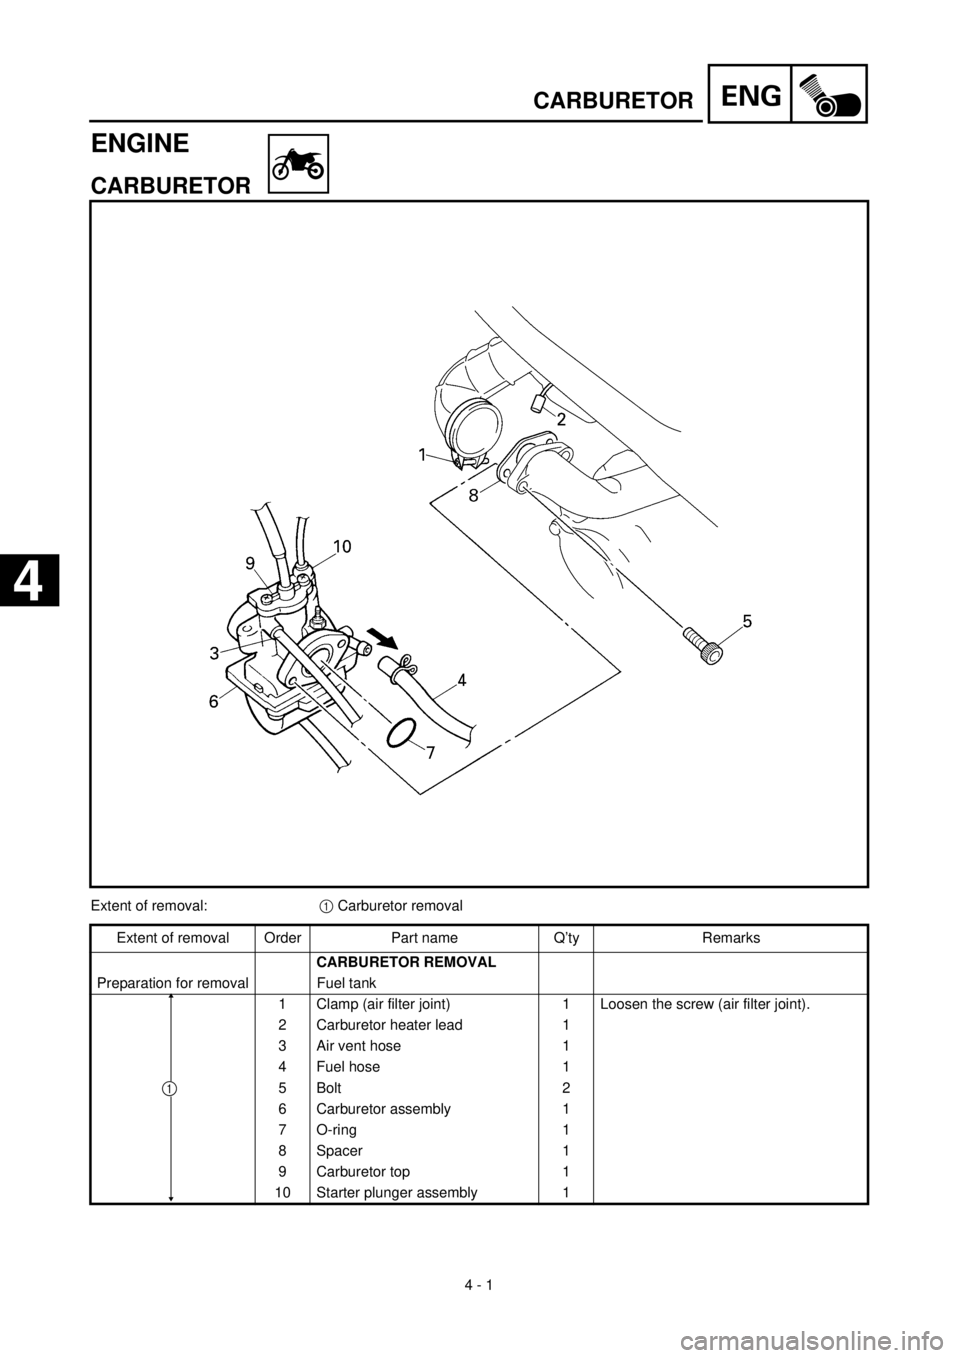 YAMAHA TTR90 2000  Betriebsanleitungen (in German)  
4 - 1
ENG
 
ENGINE 
CARBURETOR 
Extent of removal:  
1  
 Carburetor removal
Extent of removal Order Part name Q’ty Remarks  
CARBURETOR REMOVAL  
Preparation for removal Fuel tank
1 Clamp (air fi